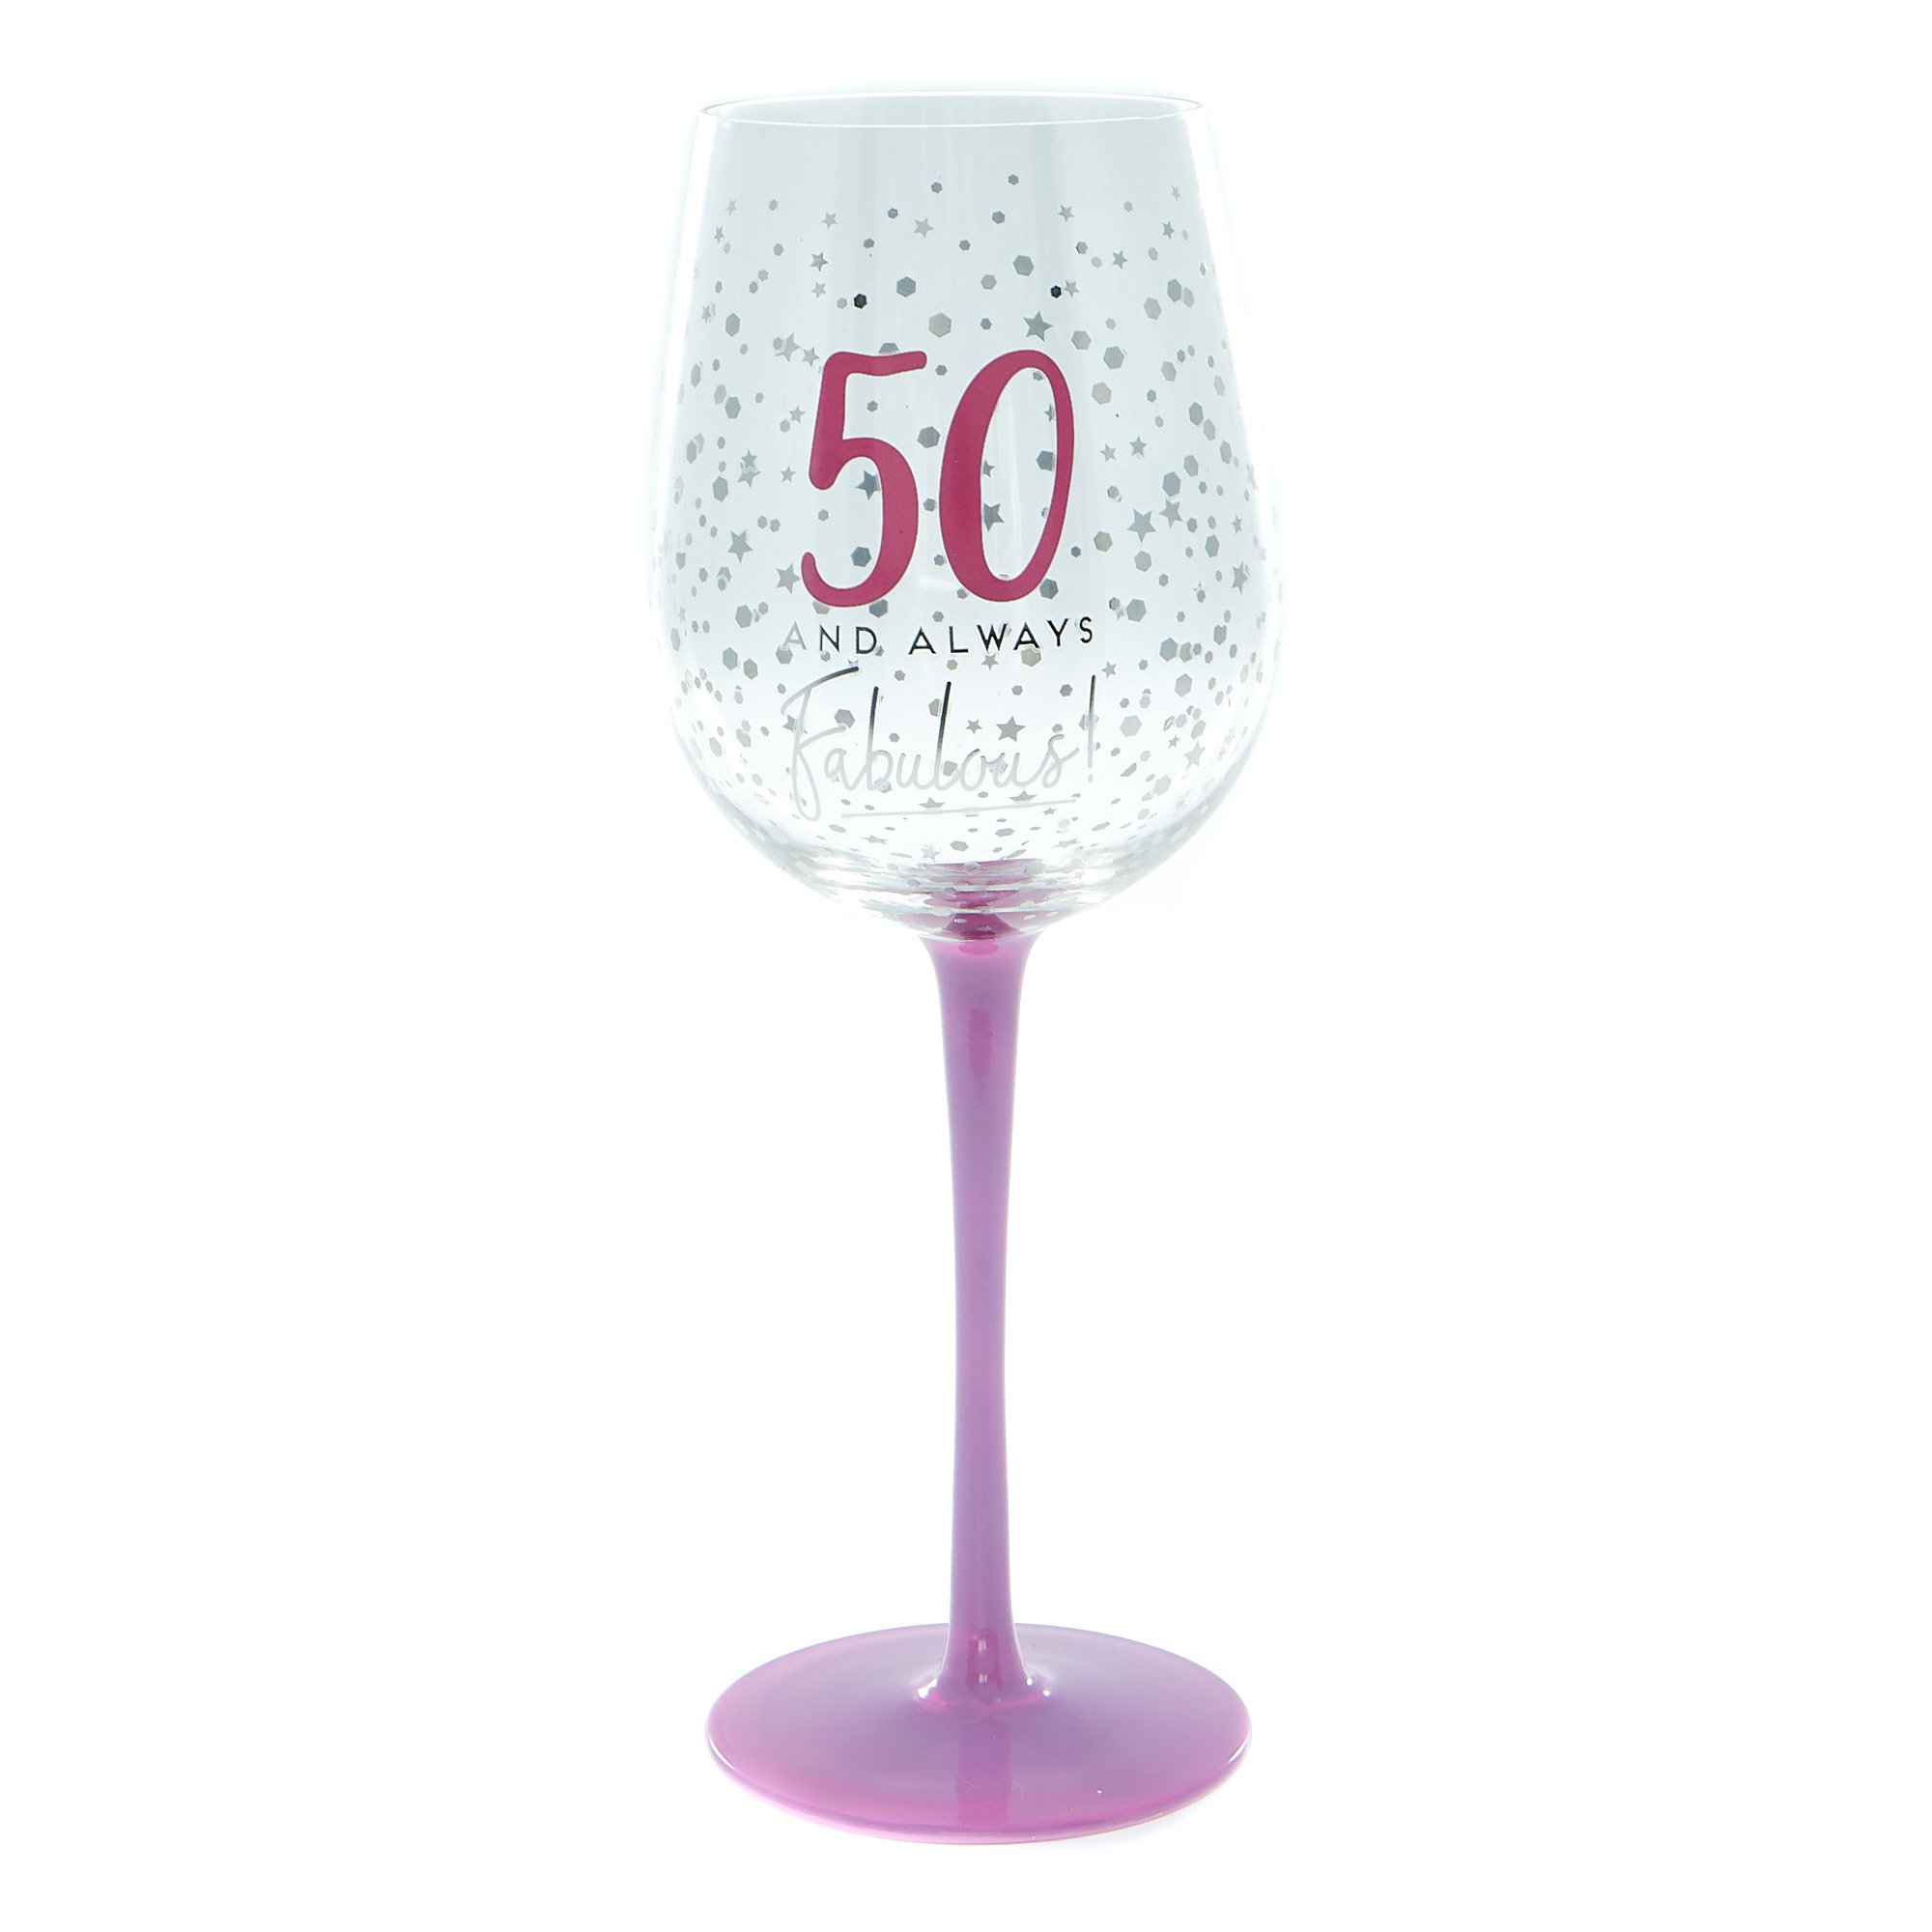 50 And Always Fabulous Wine Glass